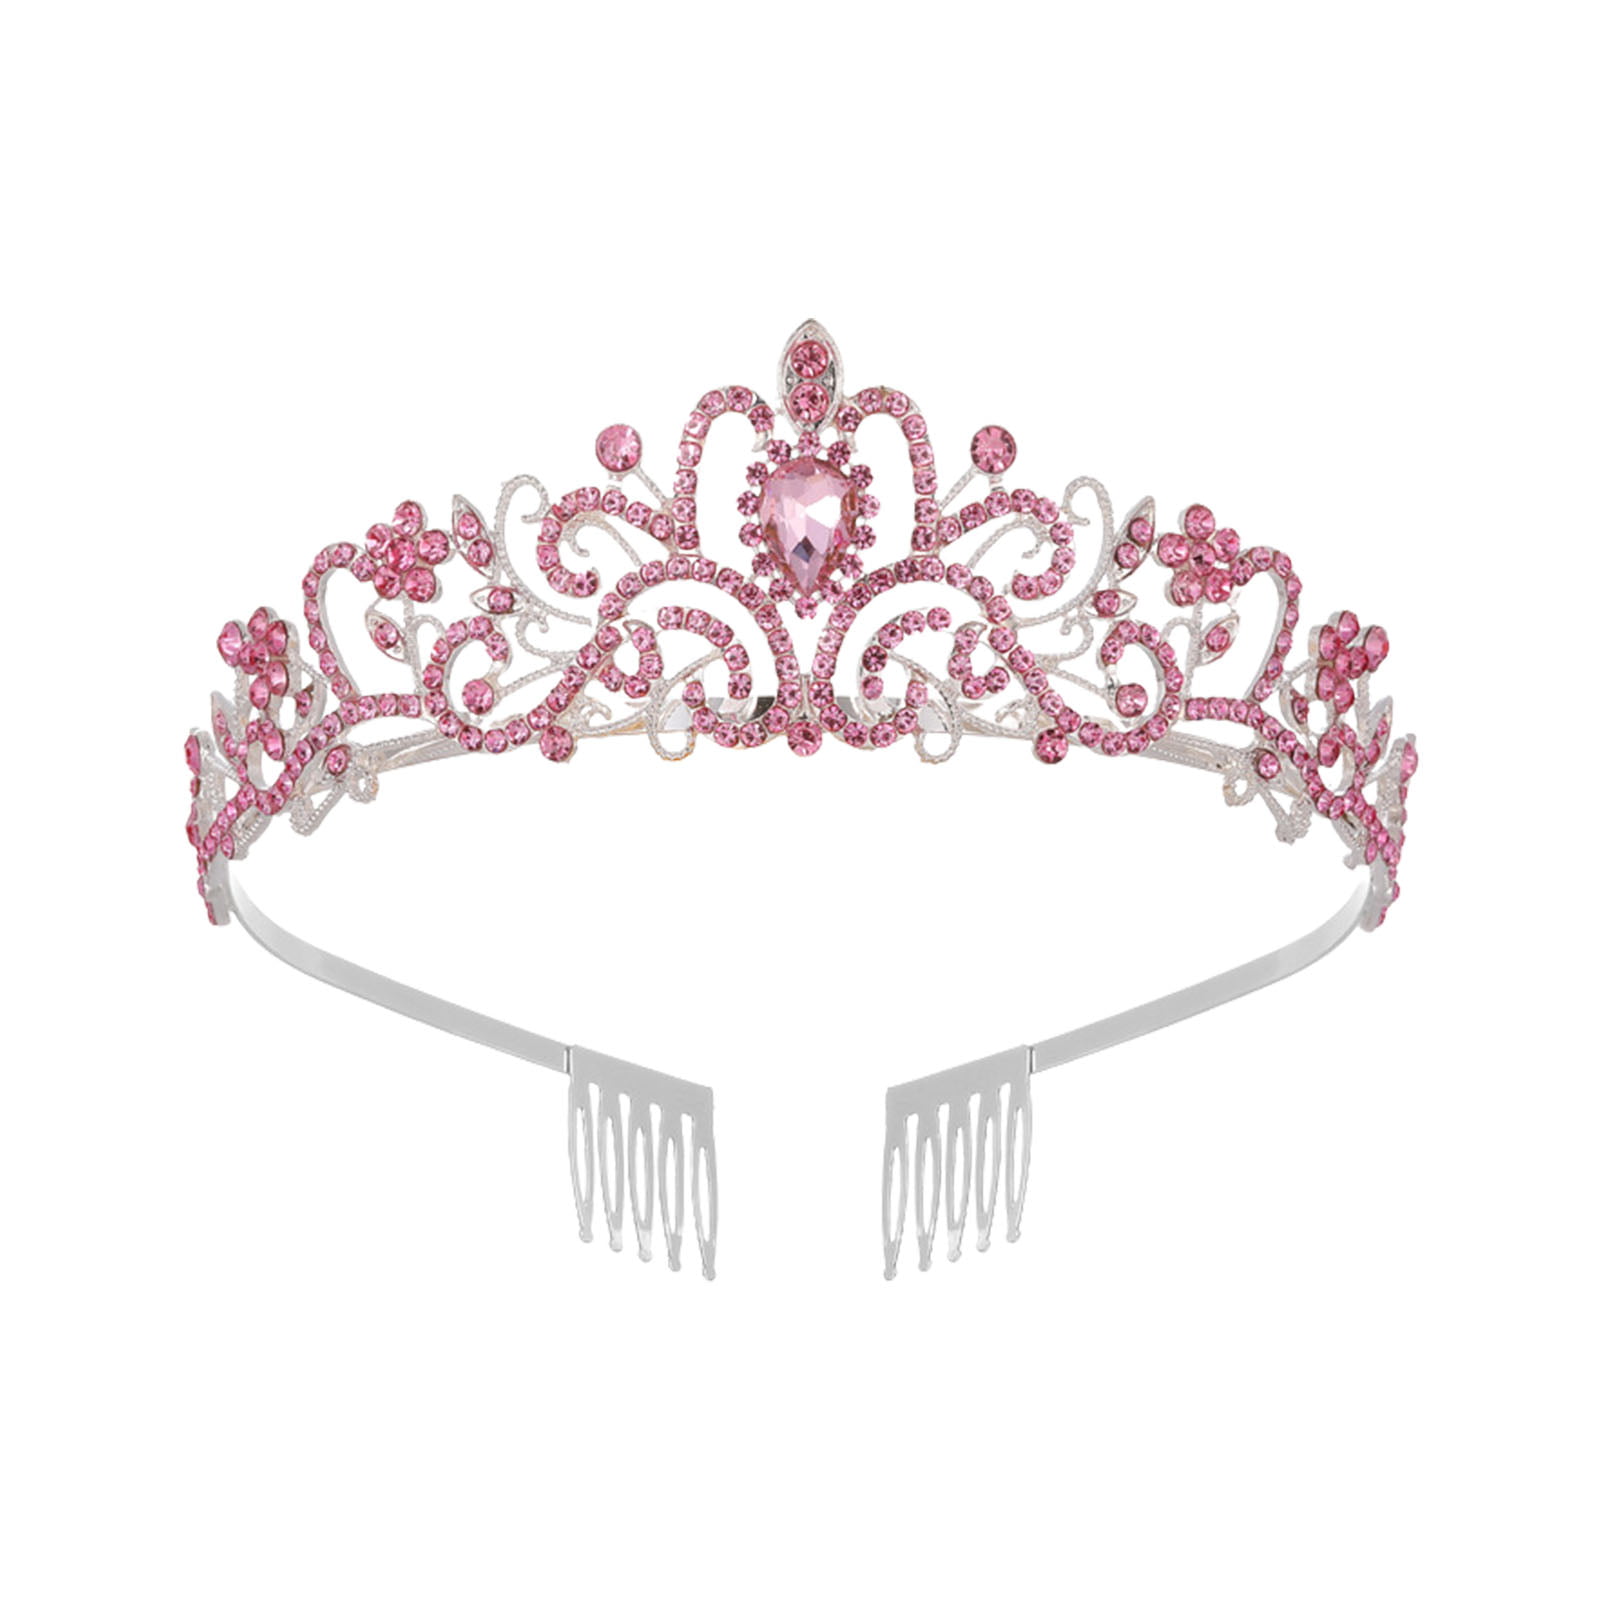 Details about   Silver Queen Wedding Bridal Crystal Rhinestone Full Crown Tiara Hair Accessories